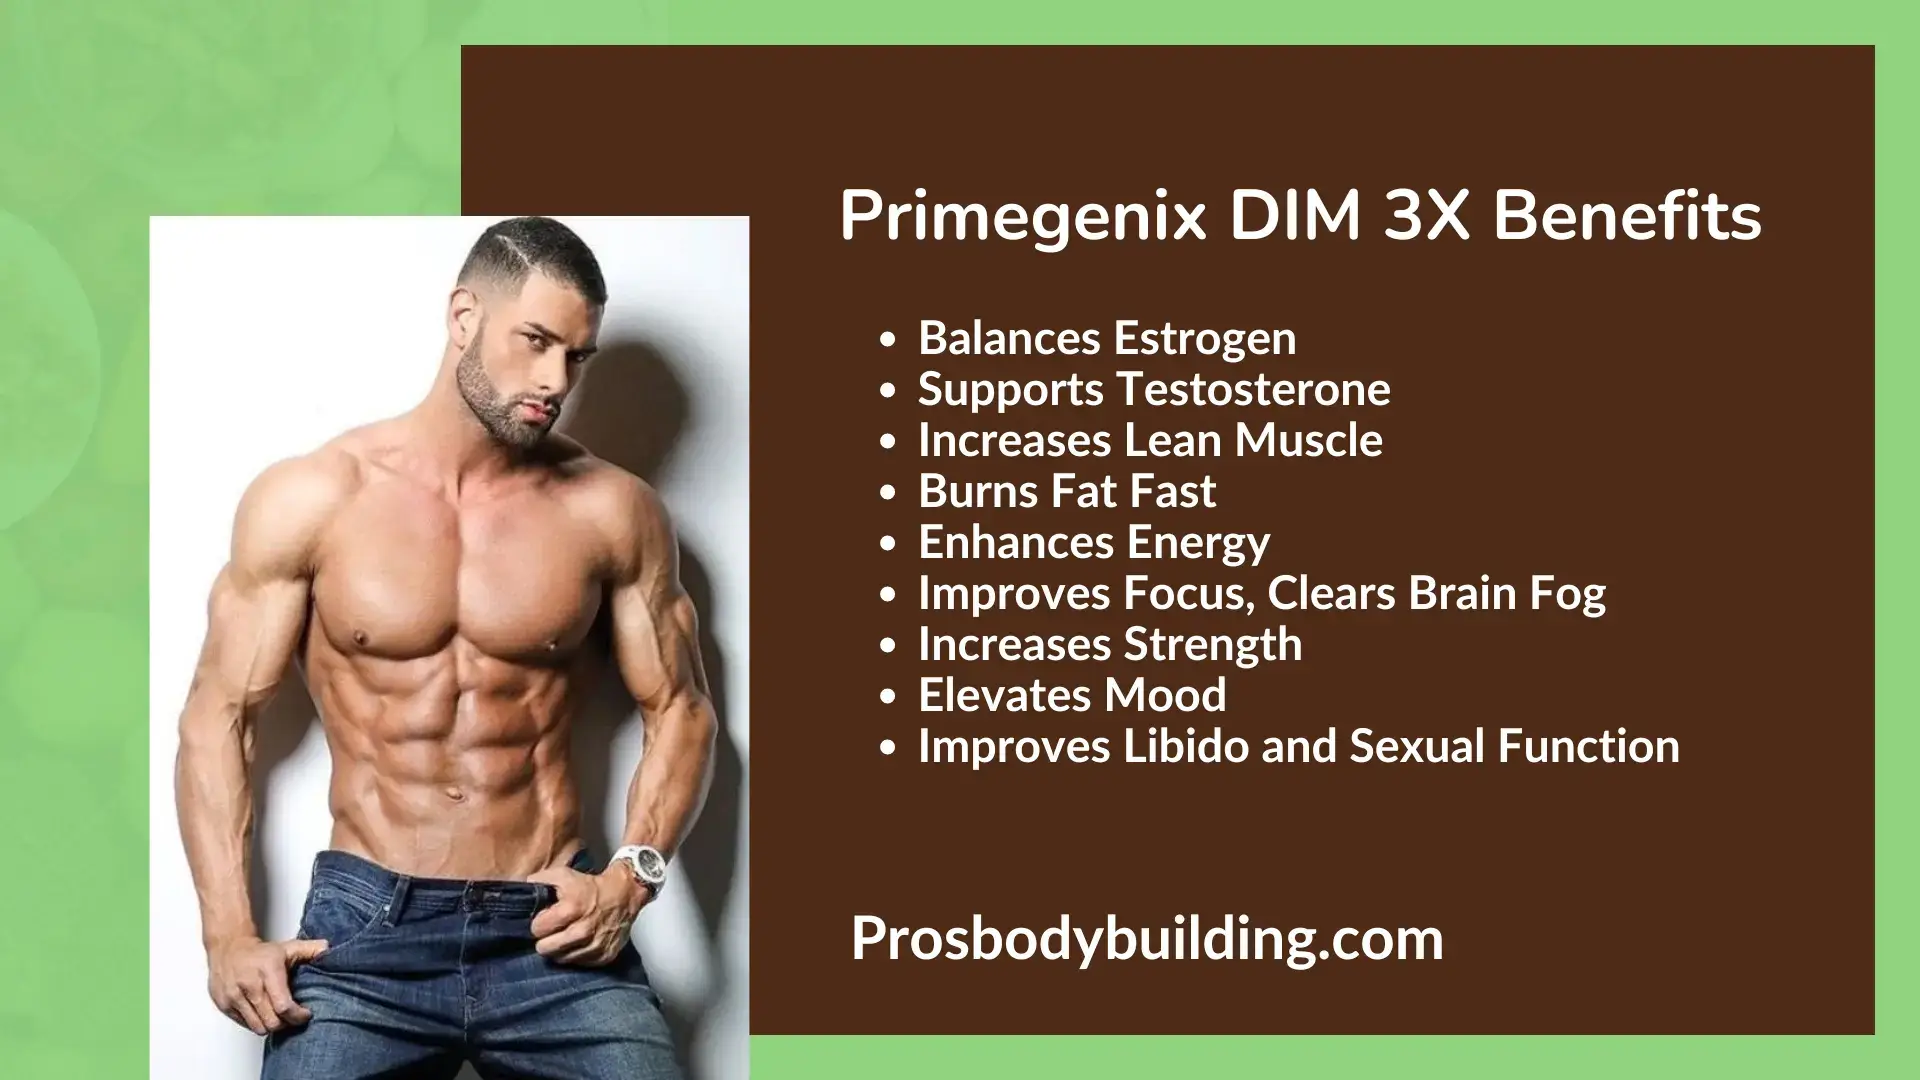 Primegenix DIM 3X review